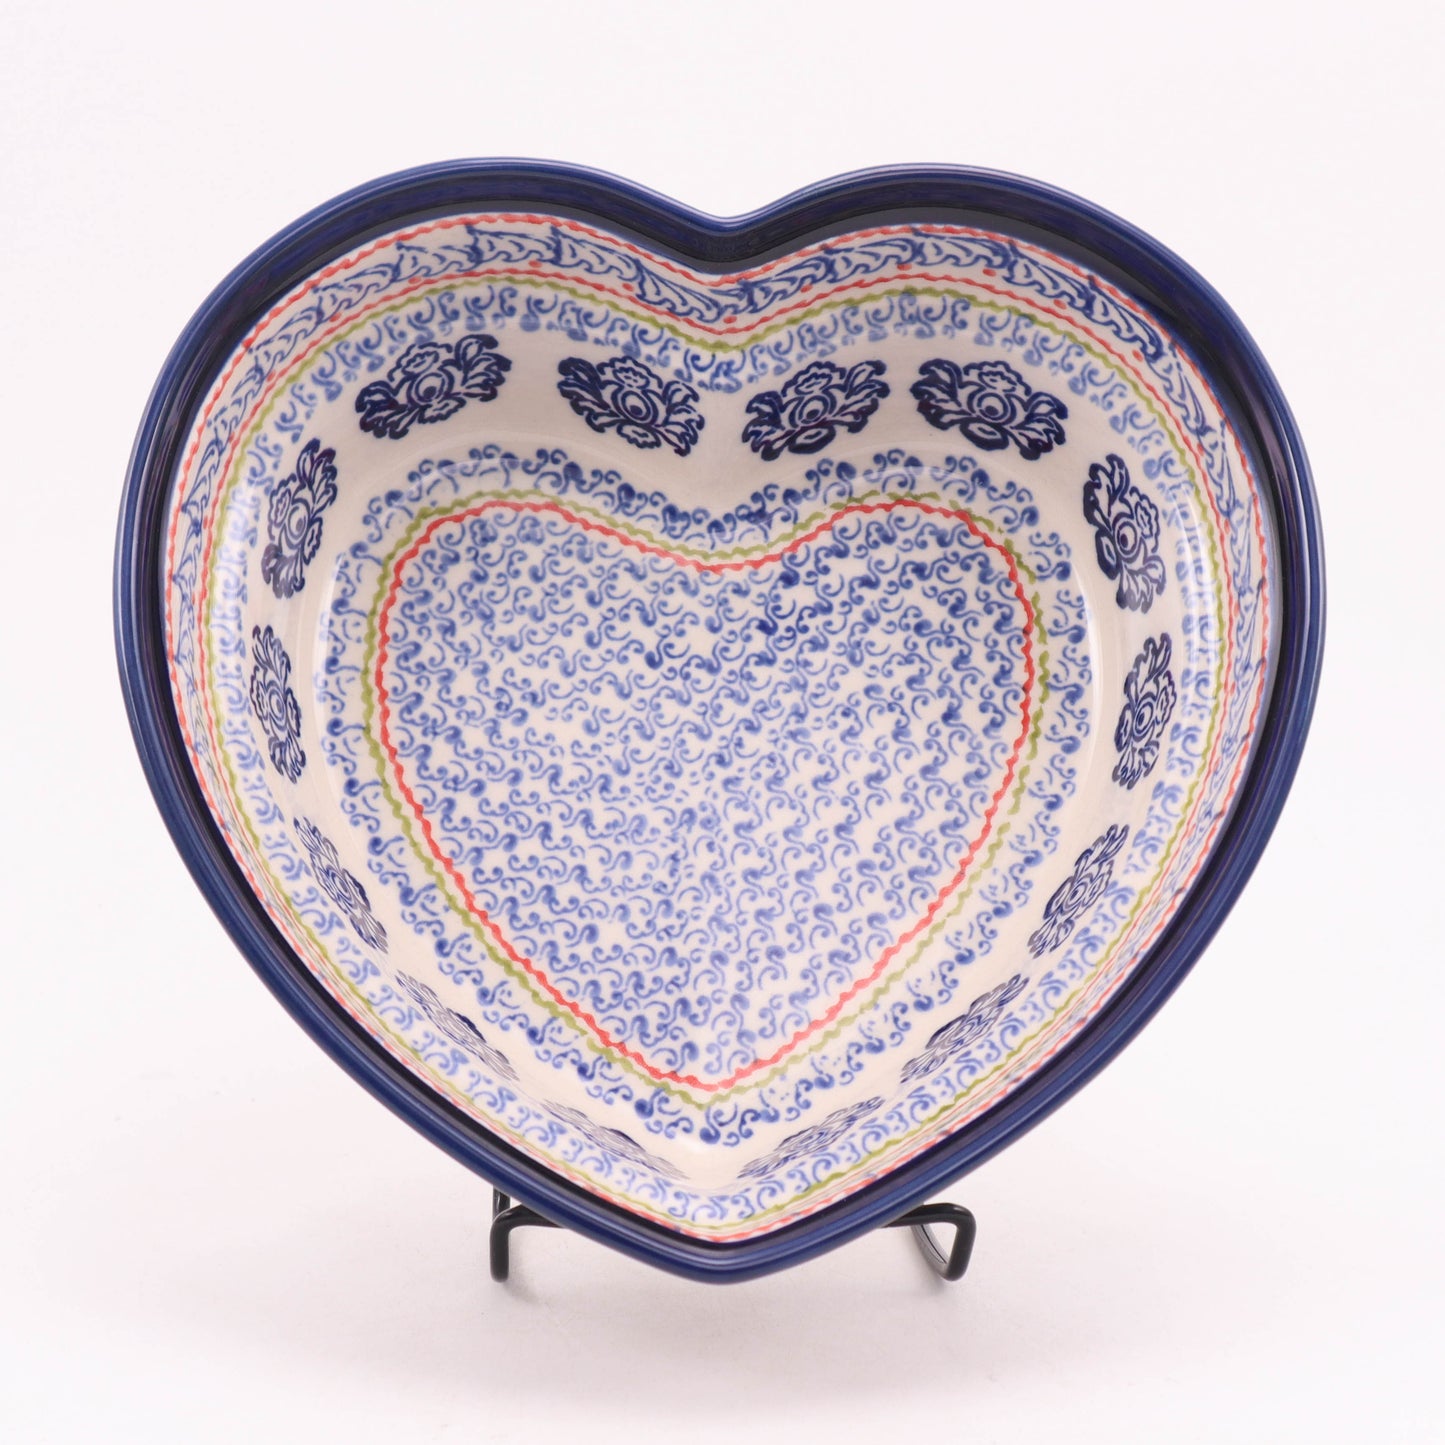 9"x8.5" Heart Bowl. Pattern: Blue Lace